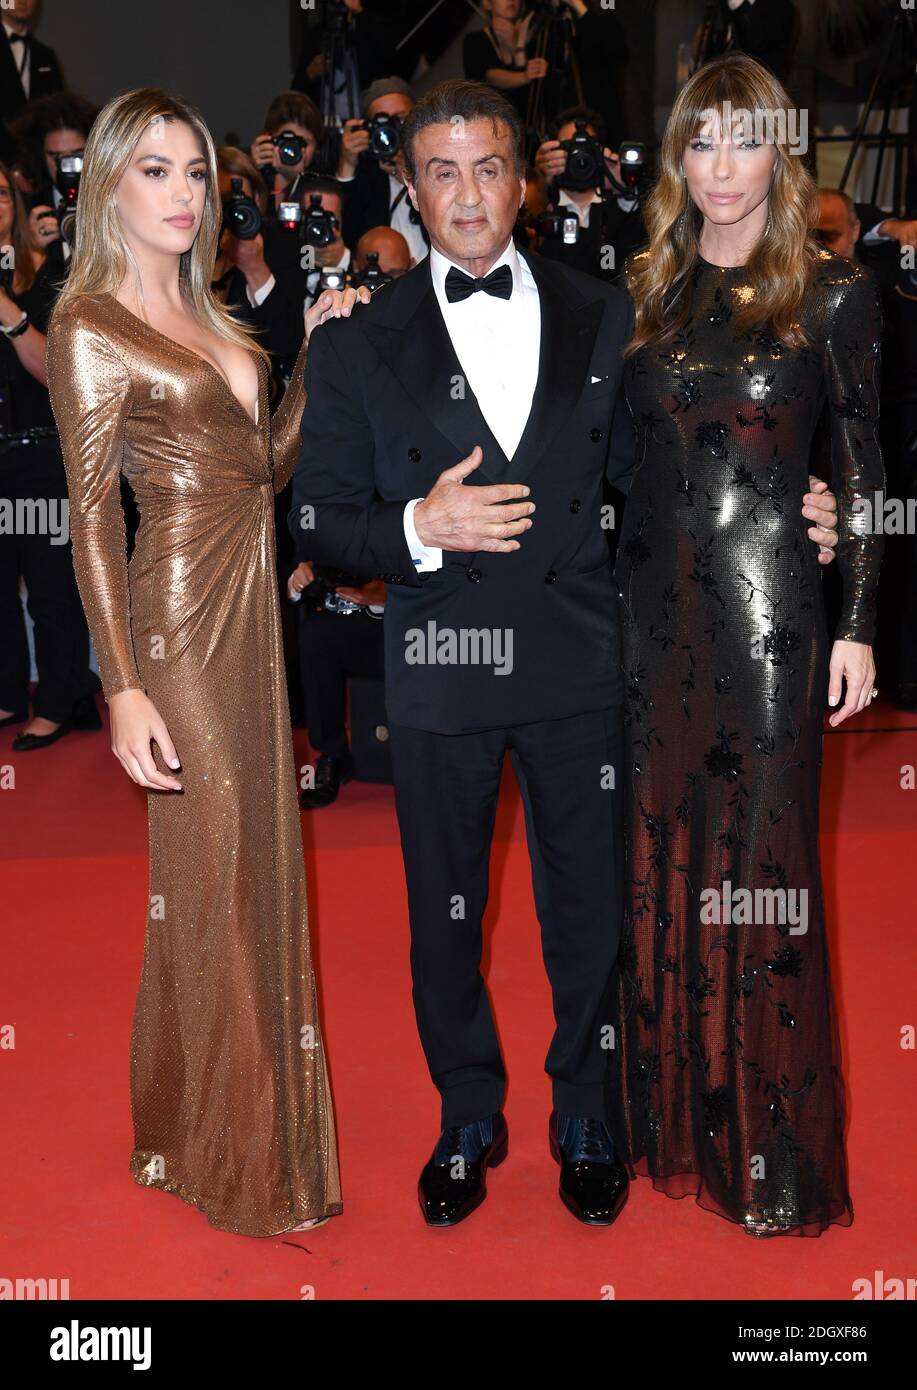 Sylvester Stallone & Wife Jennifer Flavin Return to Red Carpet